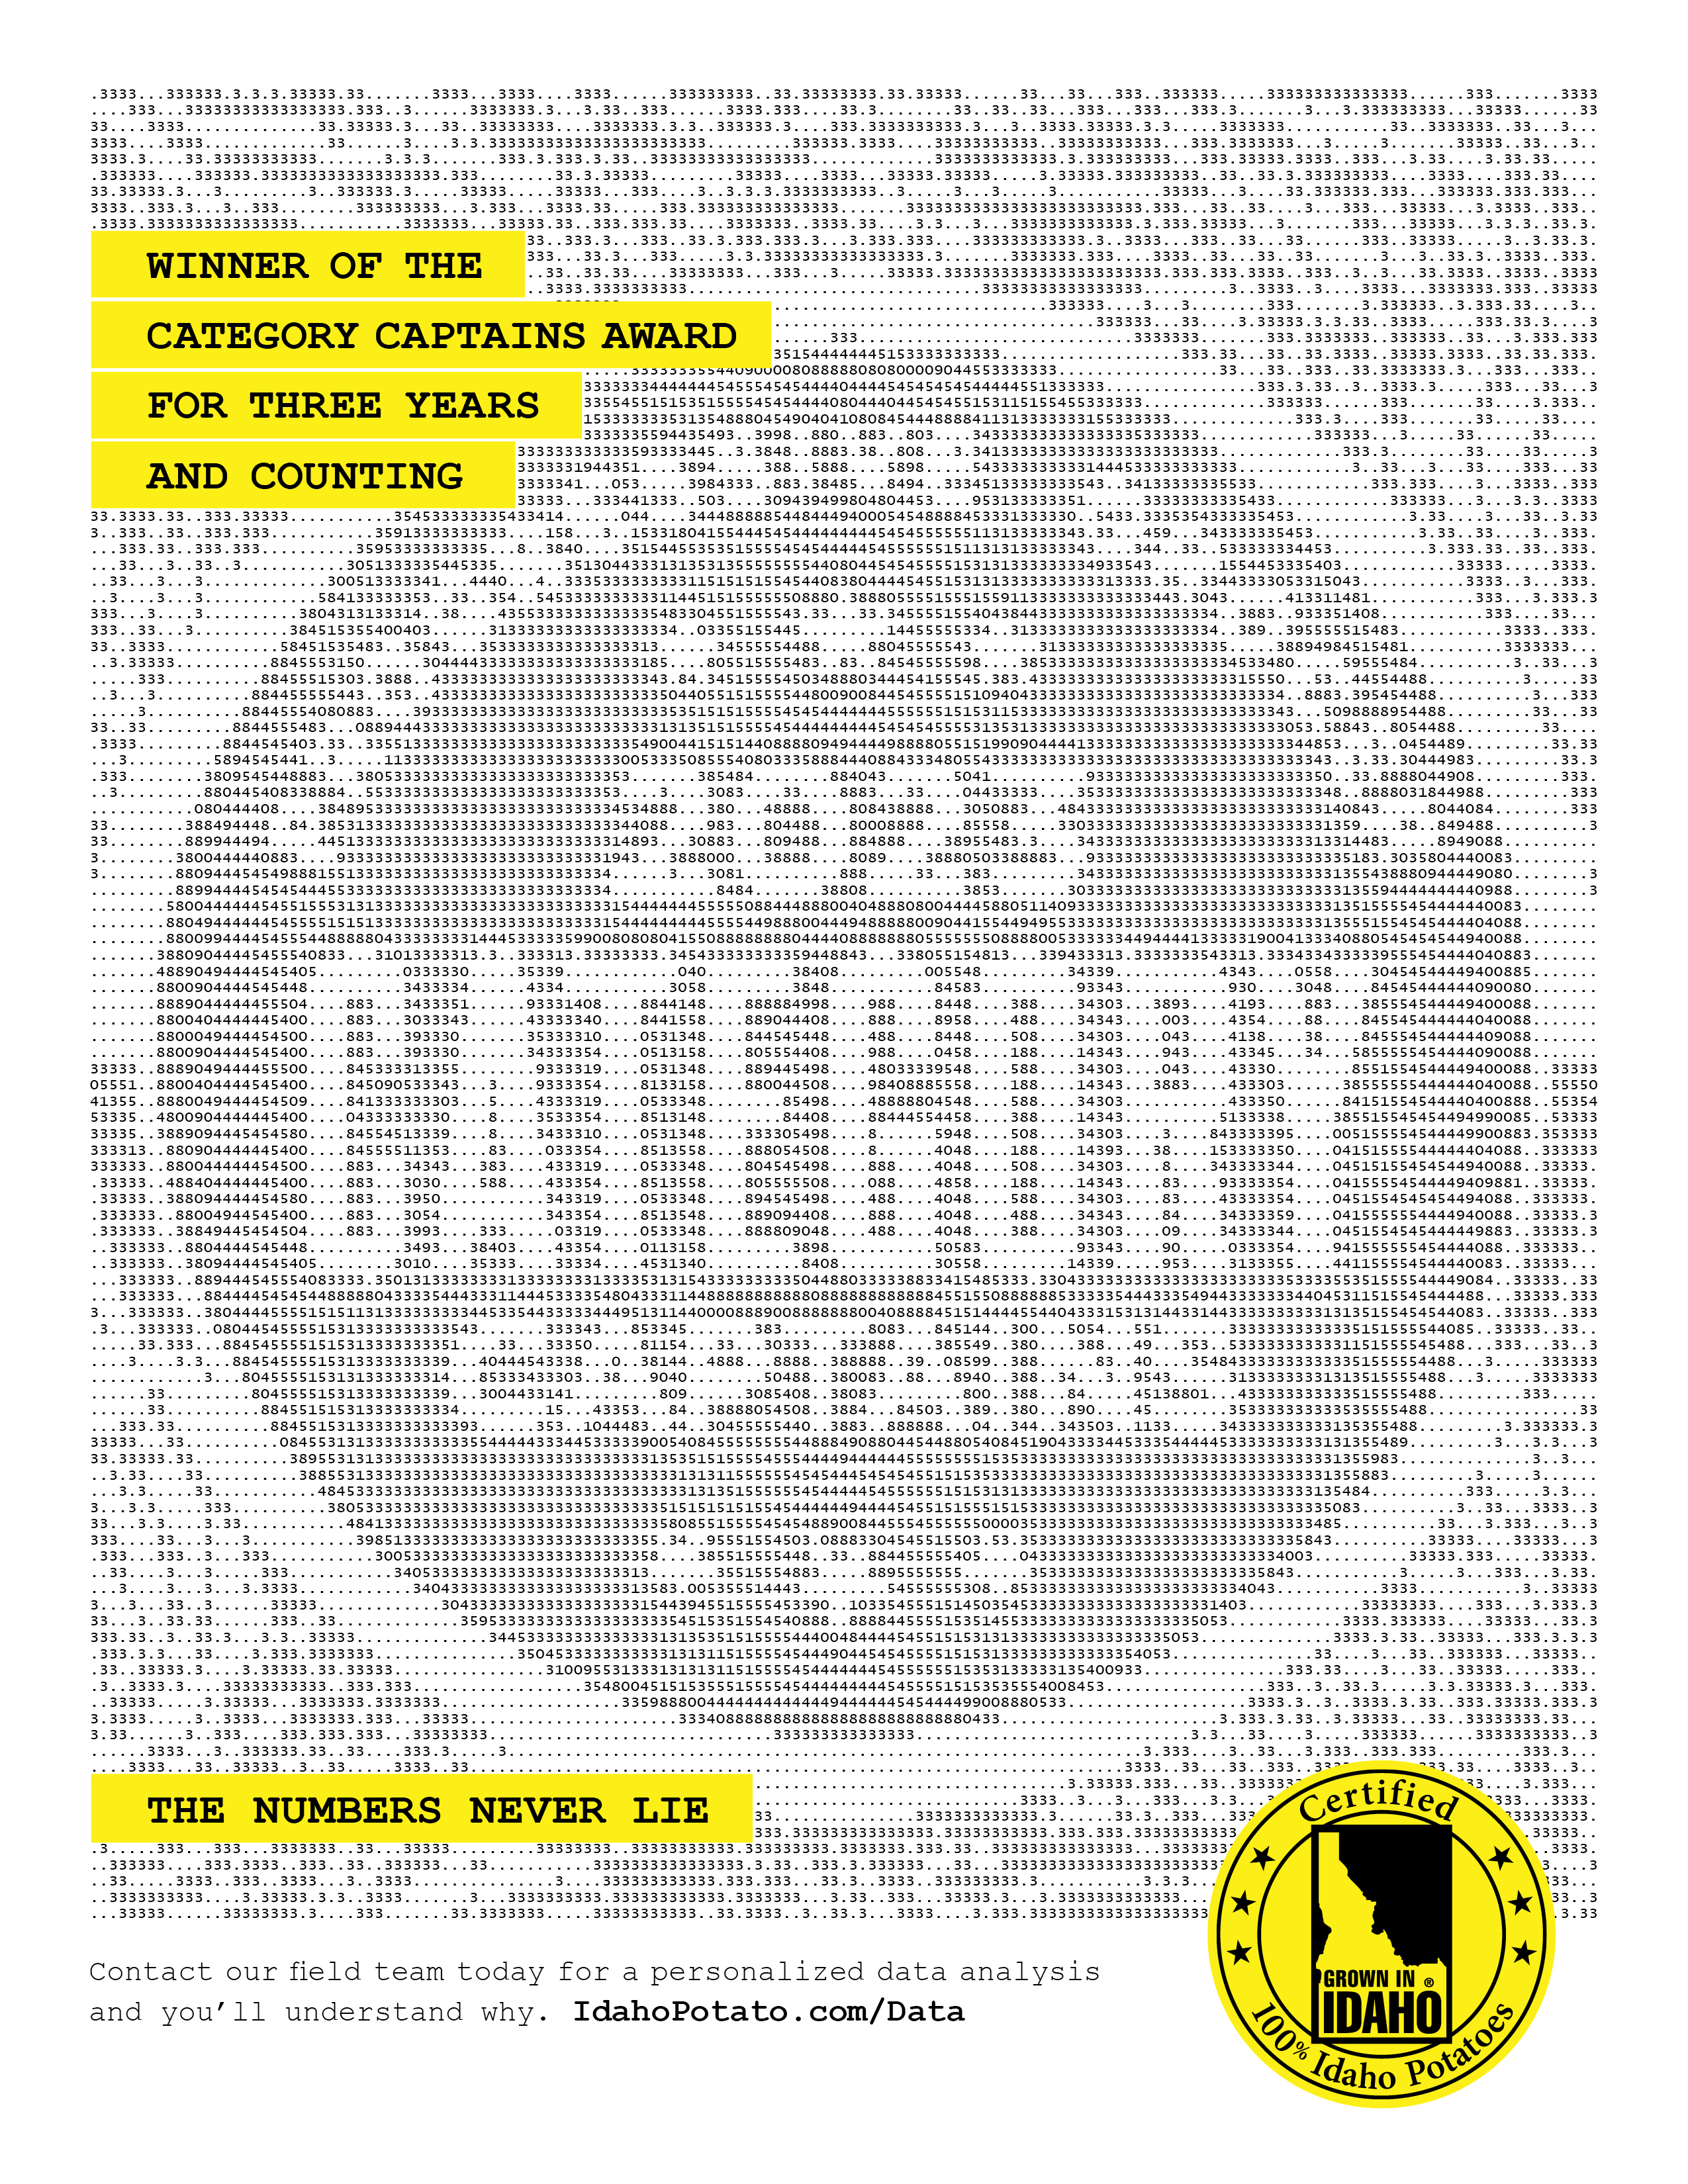 2023 Category Captains